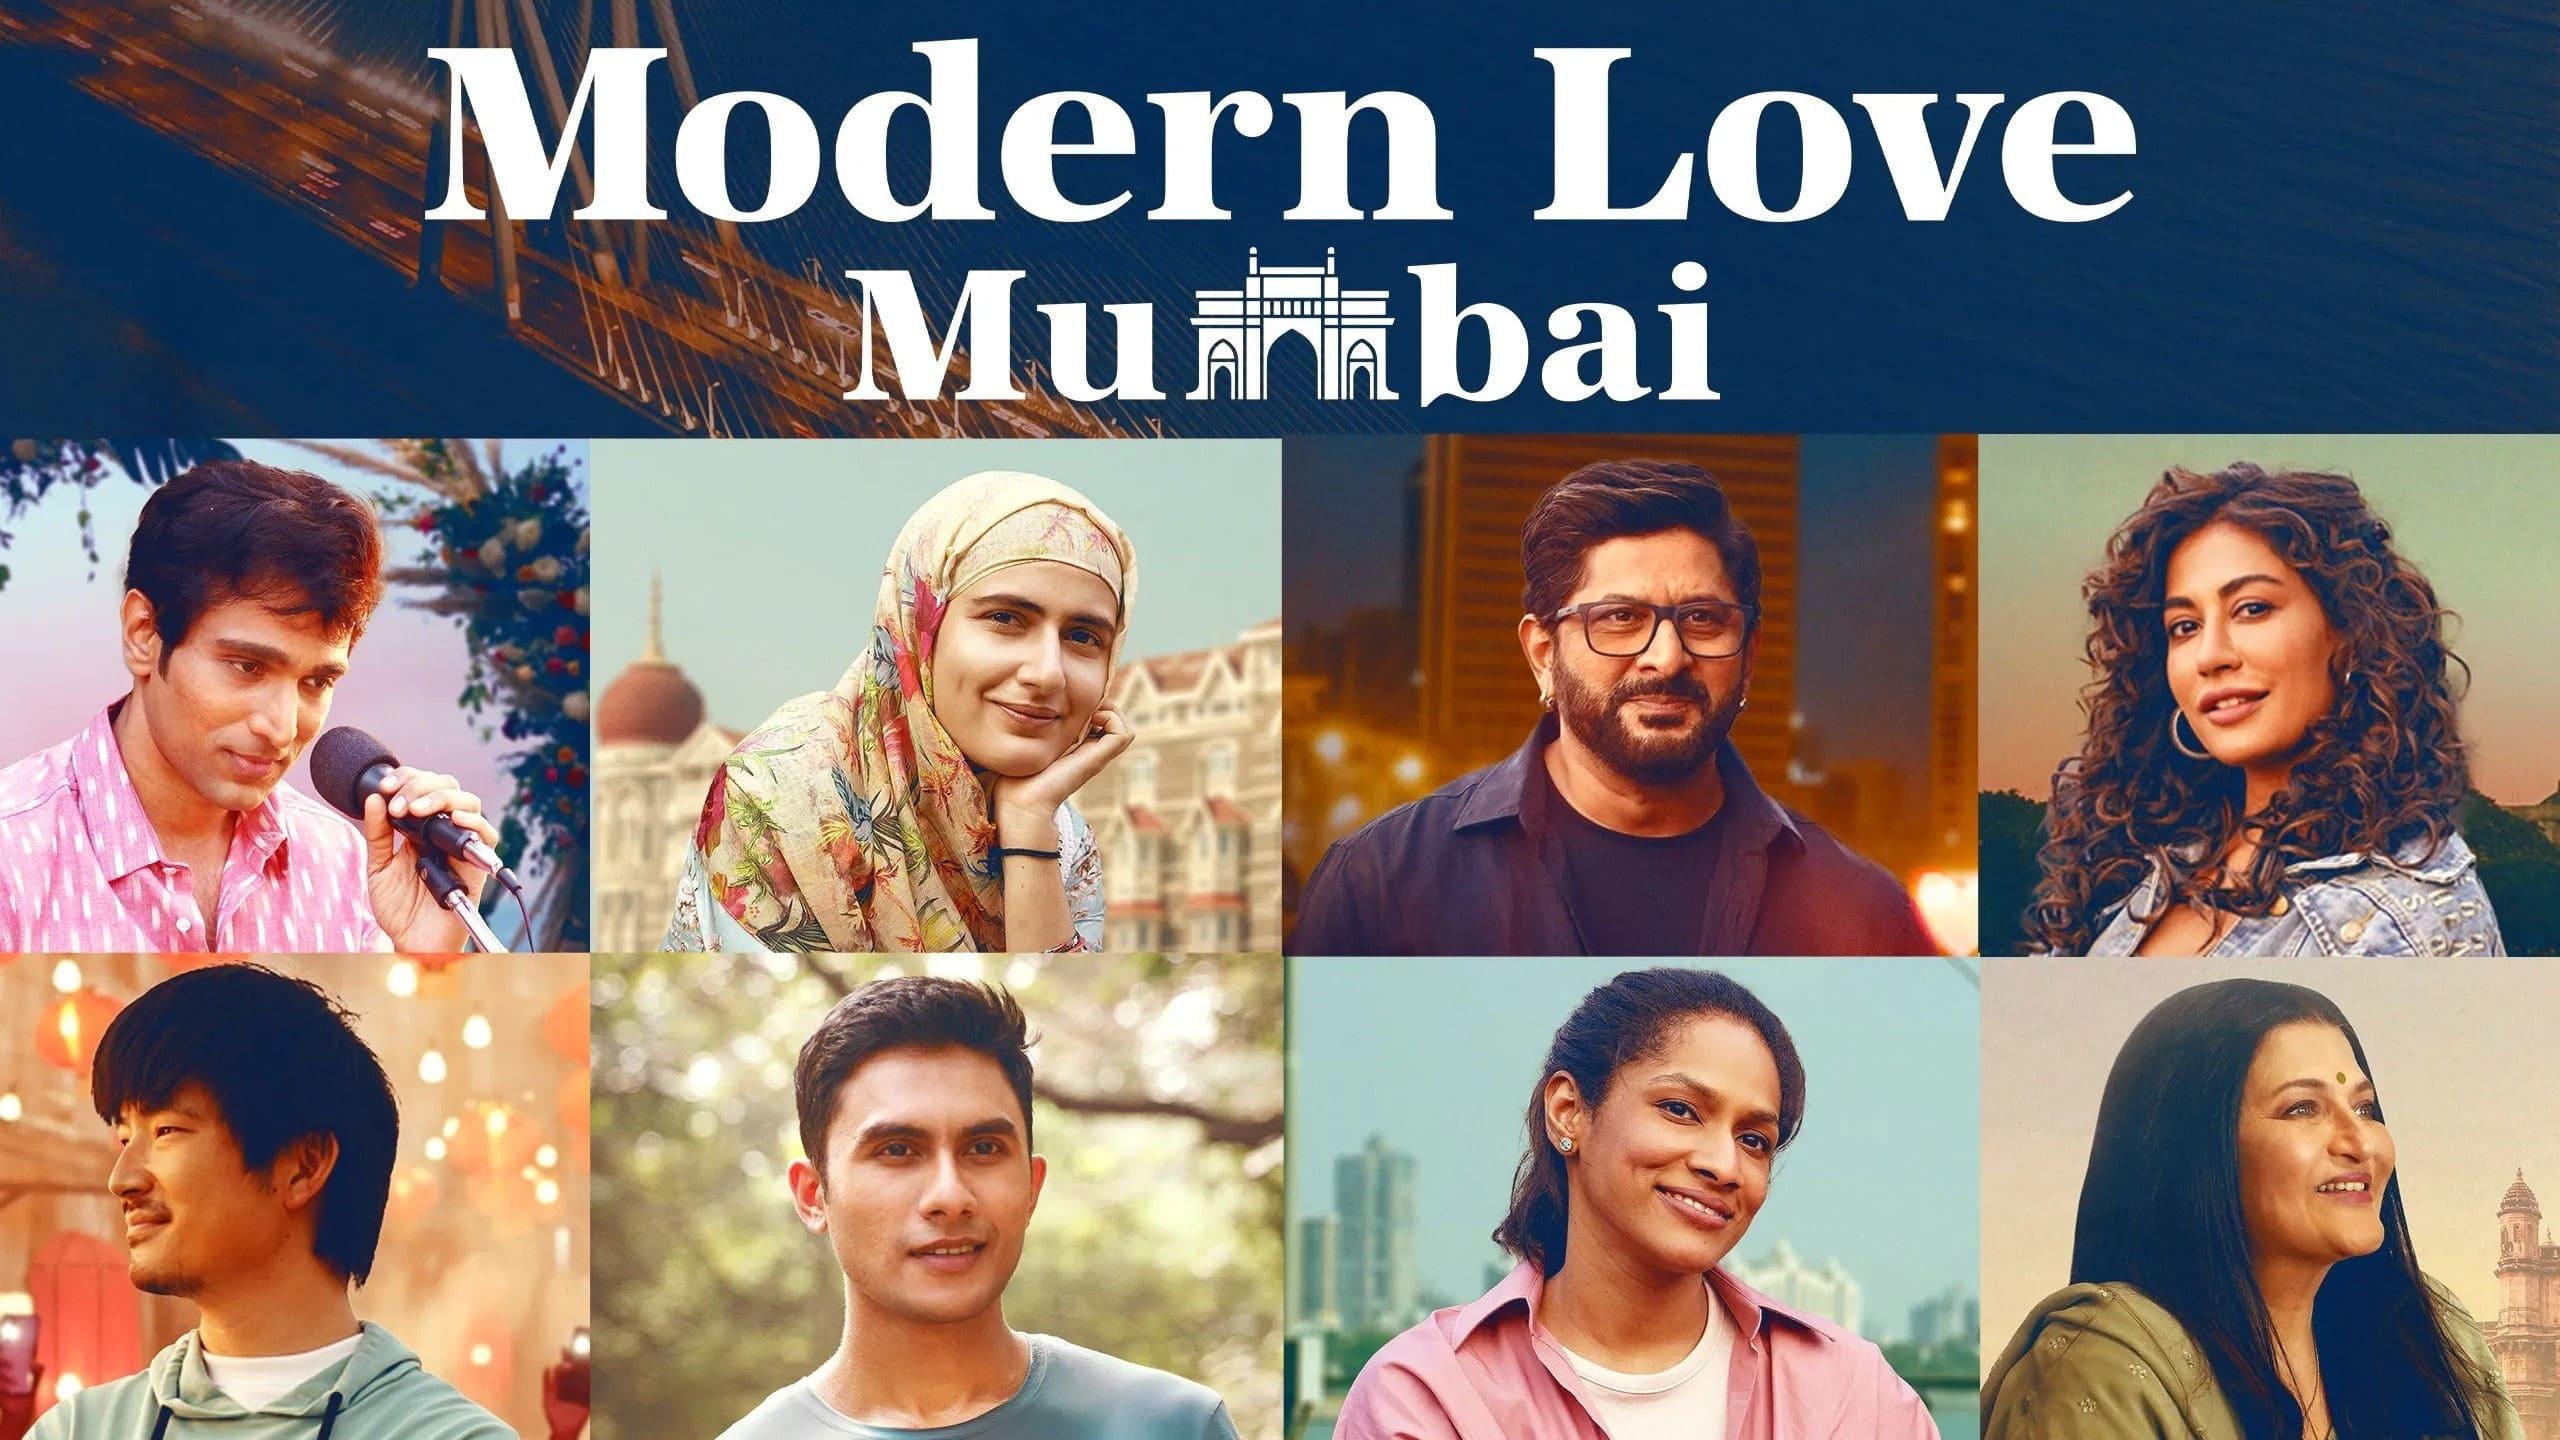 Modern Love Mumbai backdrop